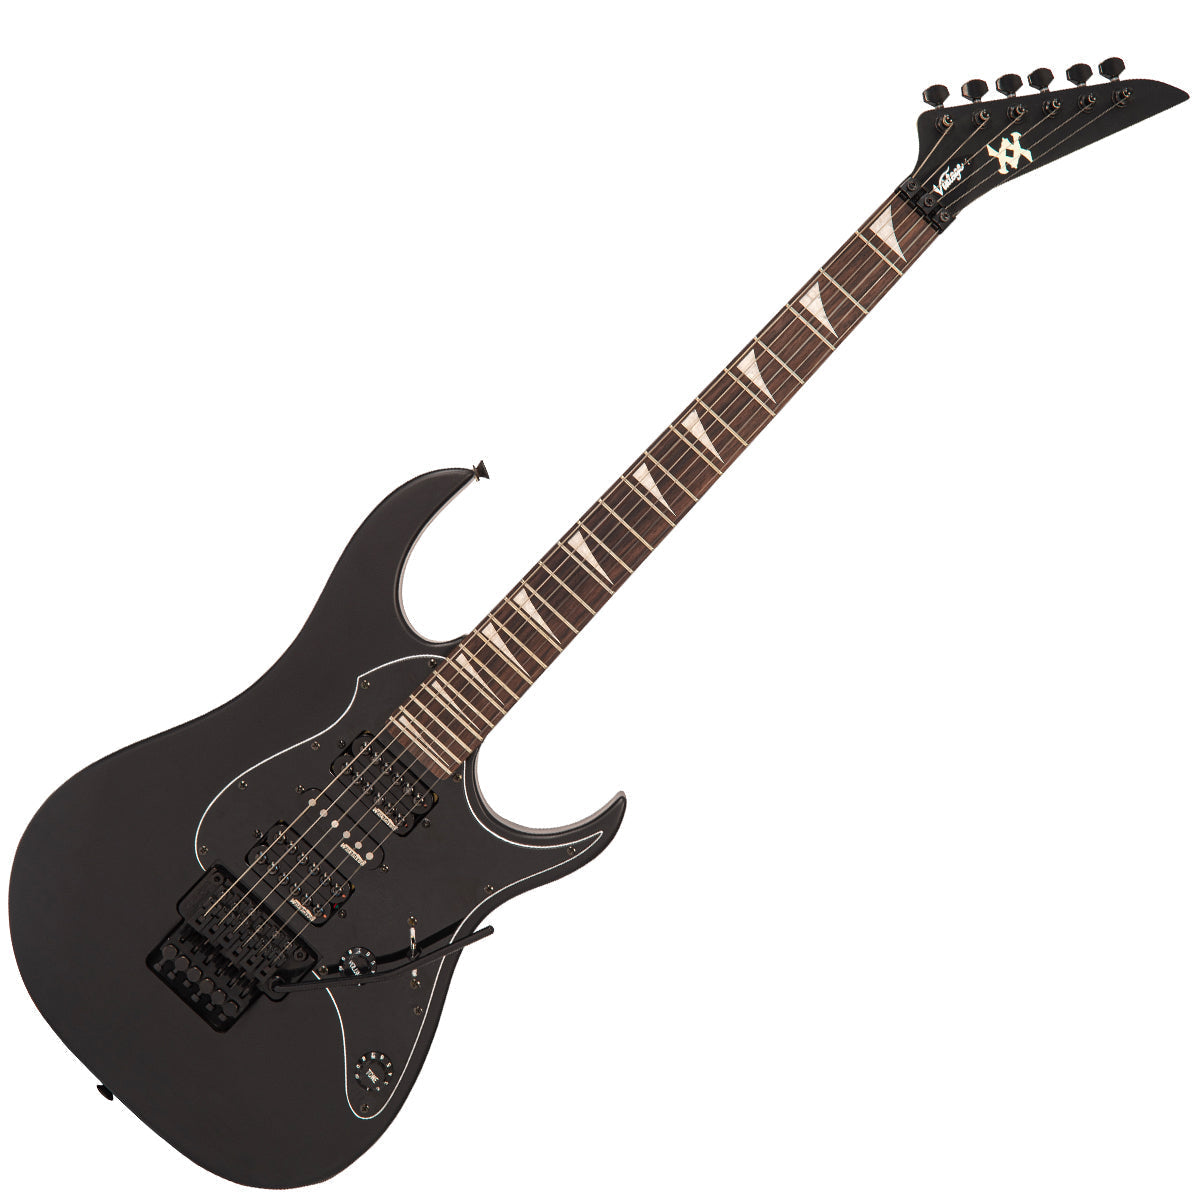 Vintage VMX Series Raider Electric Guitar ~ Satin Black, Electric Guitar for sale at Richards Guitars.